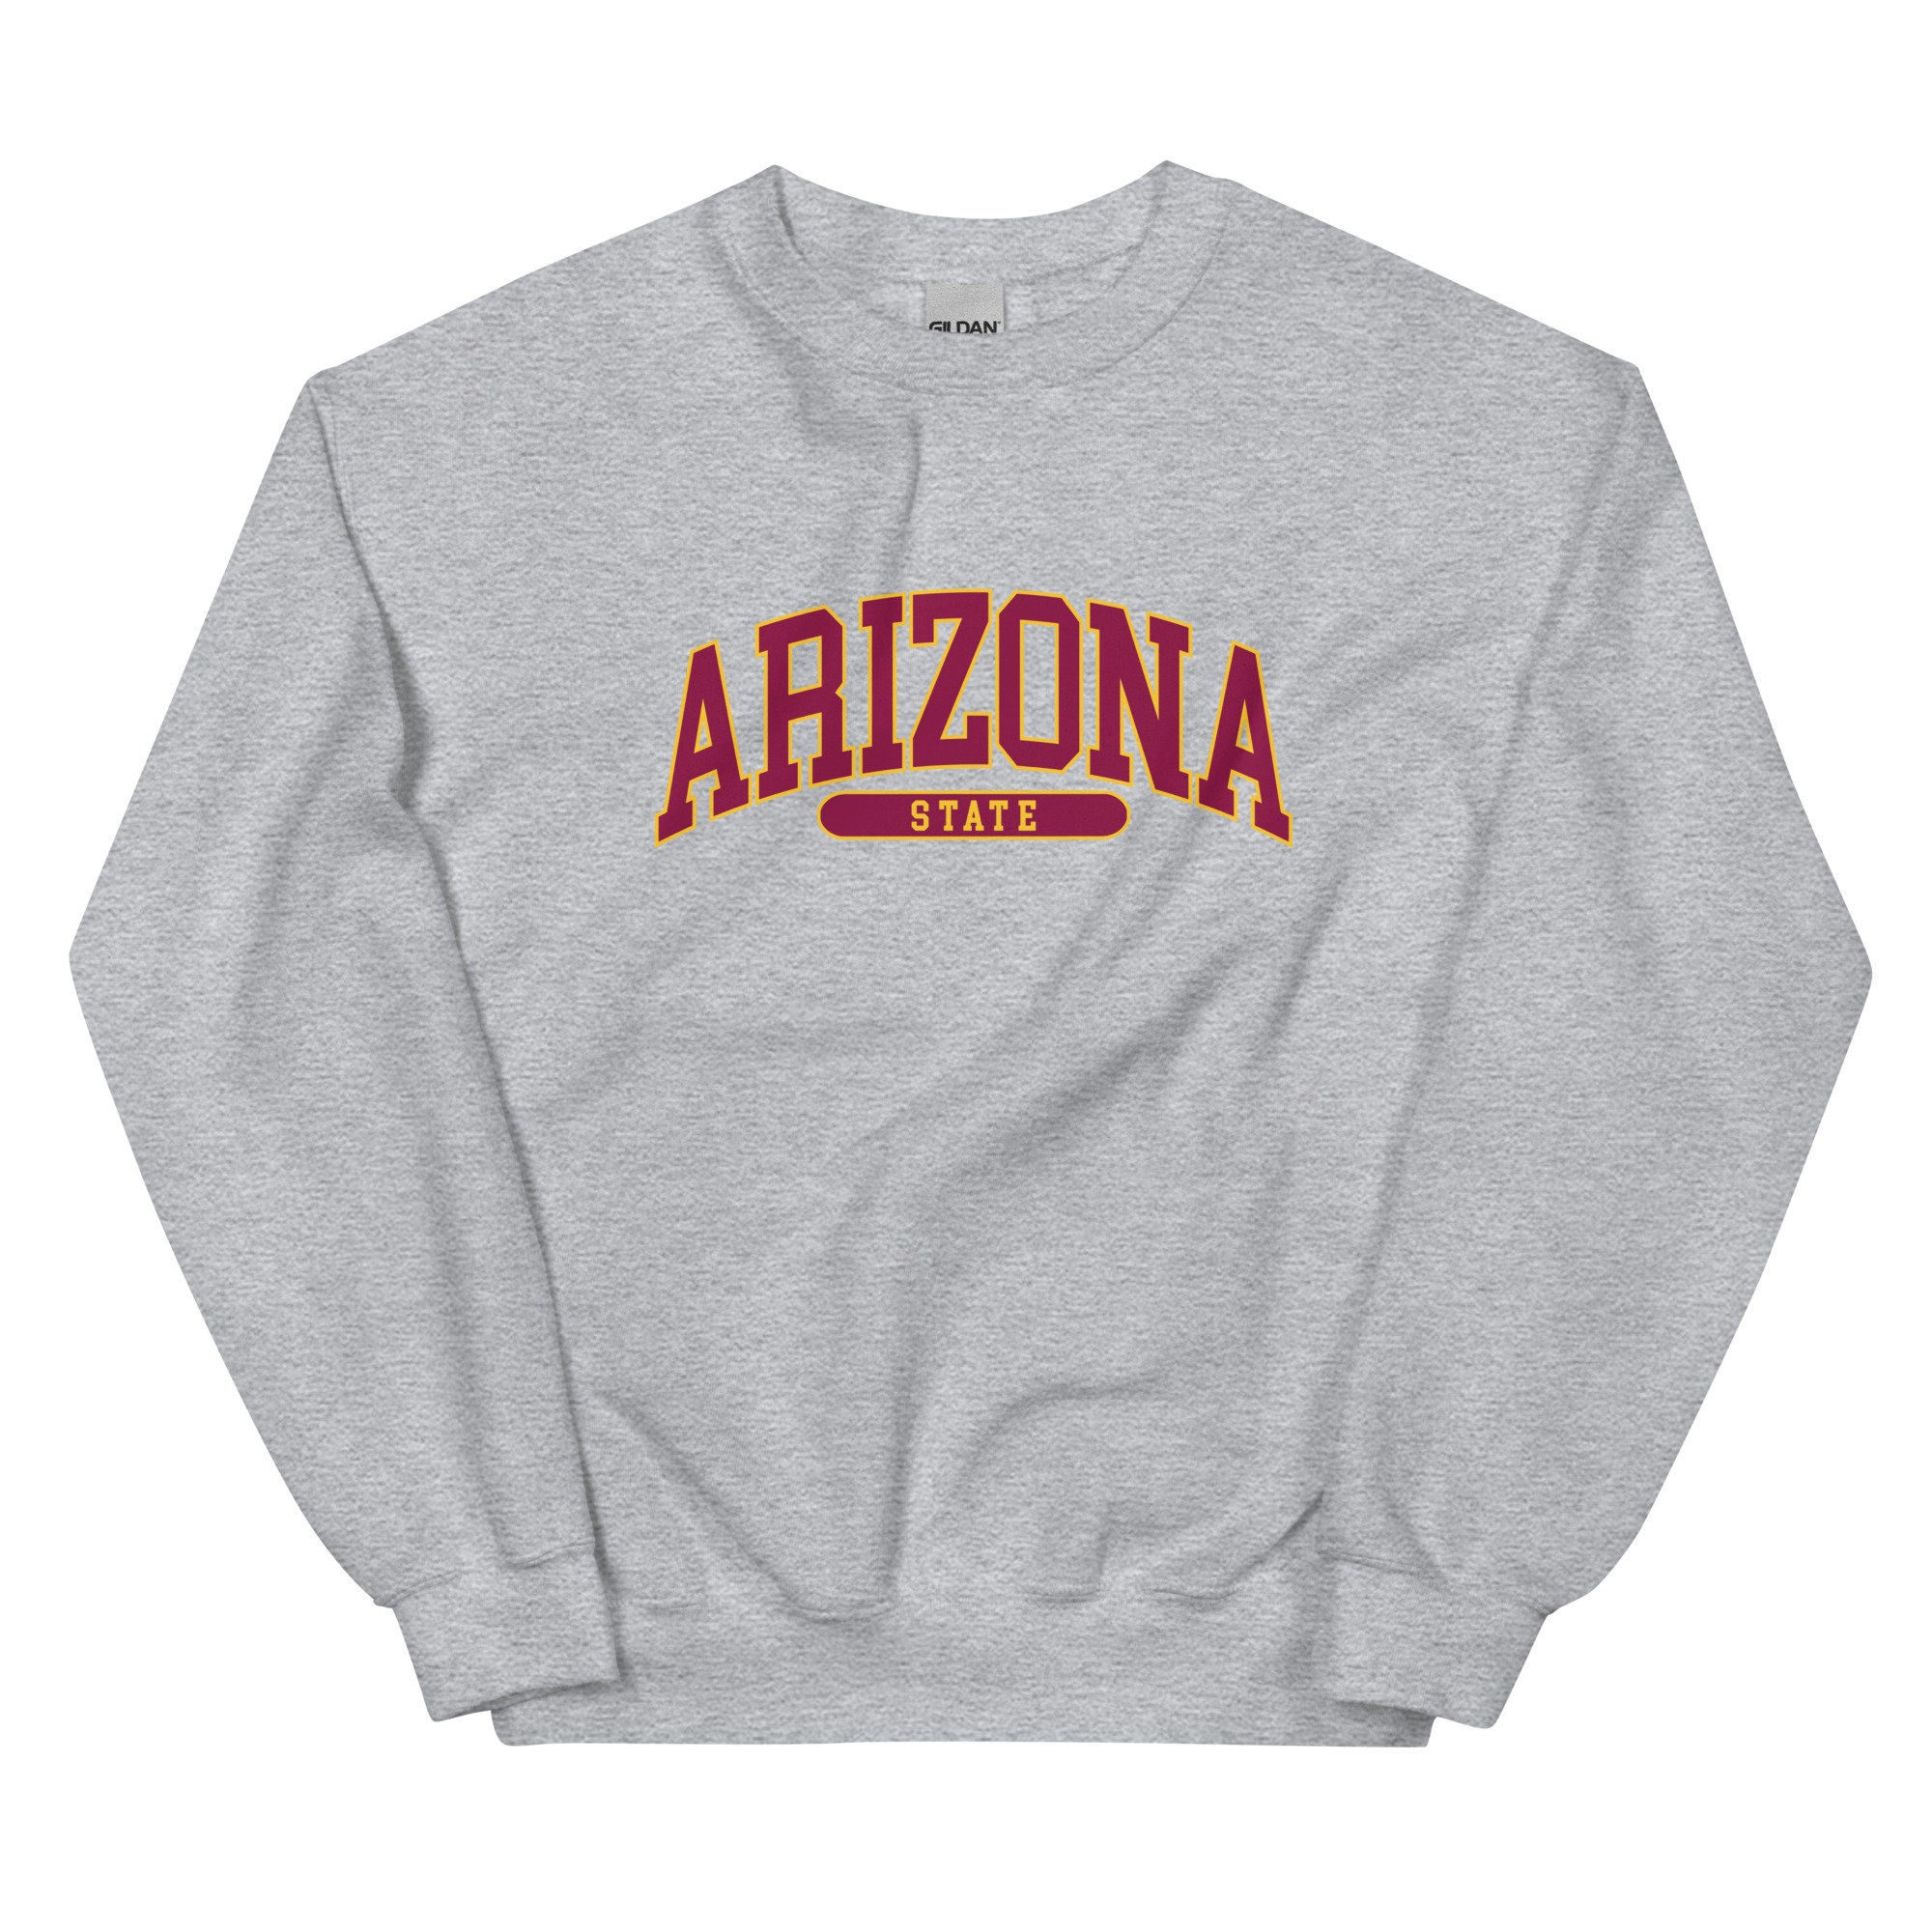 Arizona State Allmade Light Organic French Terry Crewneck Sweatshirt Arizona State Class of 2023 W Pitchfork | Light Grey | 2XLarge